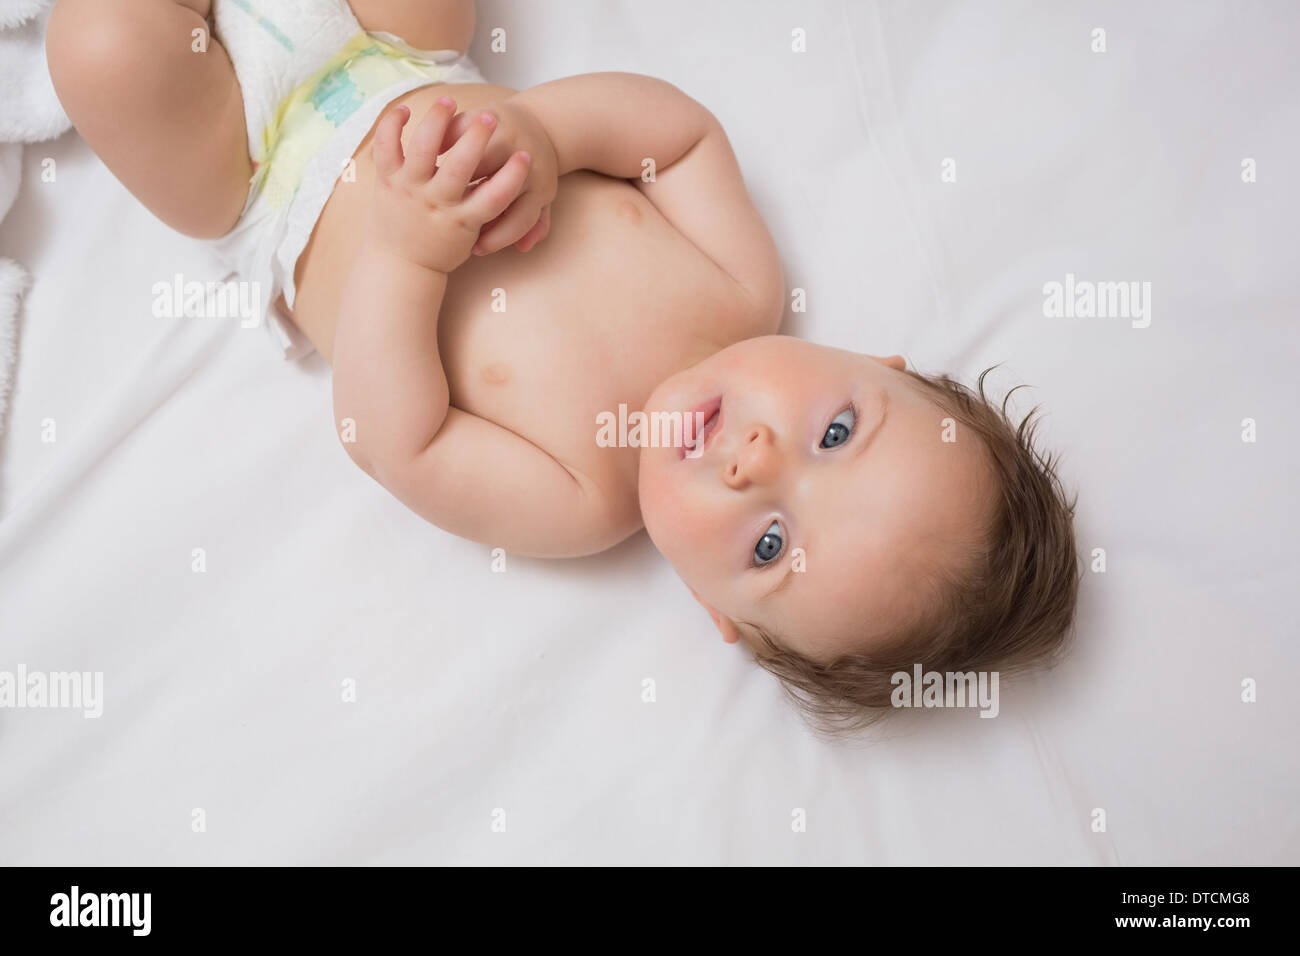 Innocent baby lying in crib Stock Photo